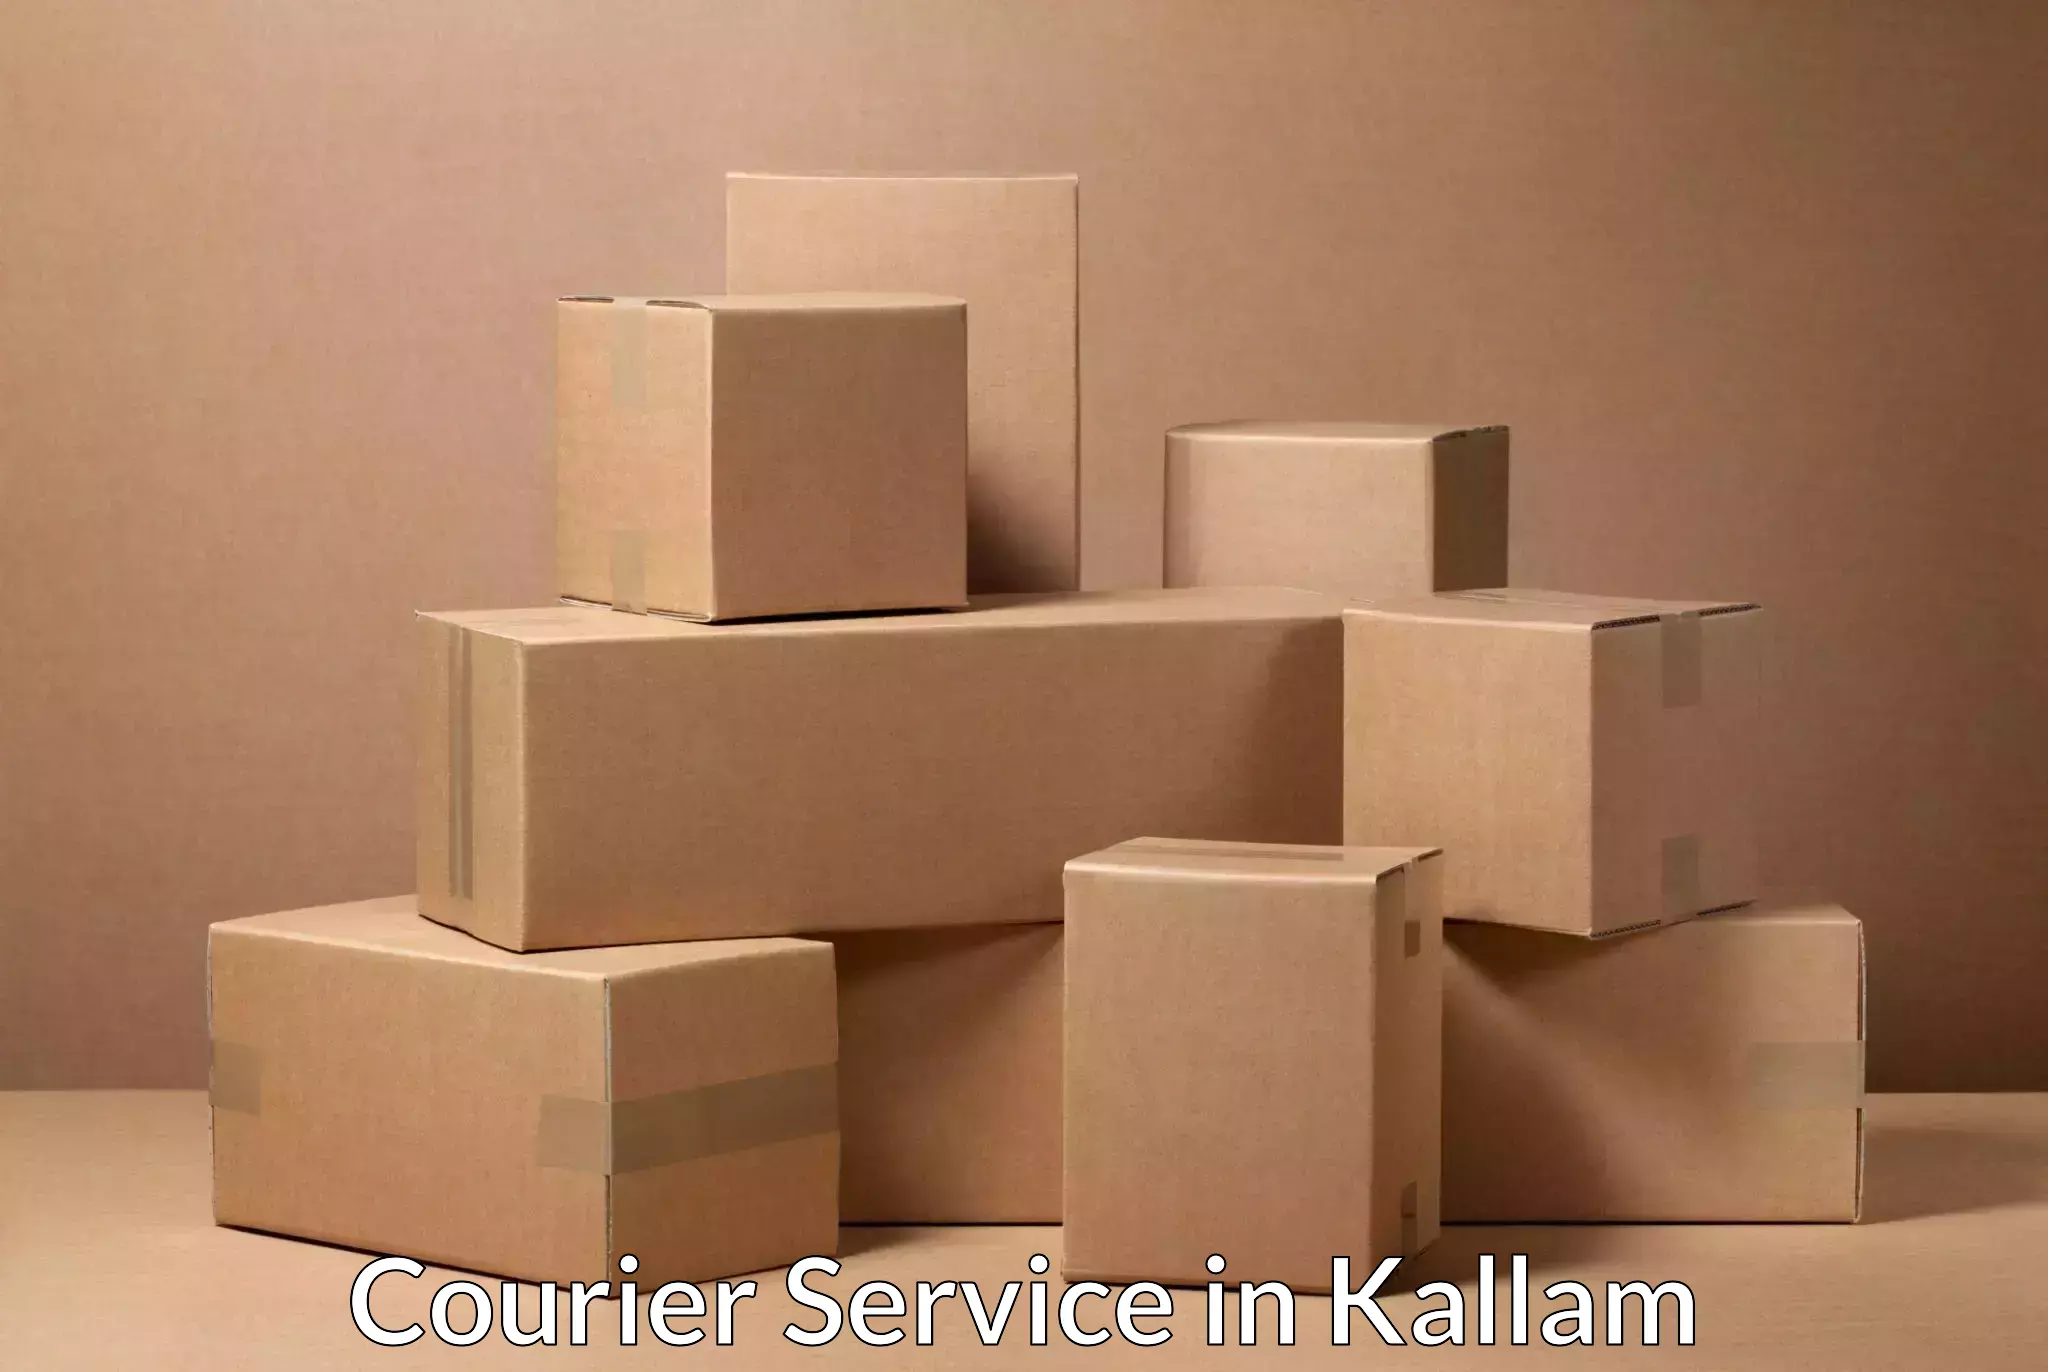 Reliable package handling in Kallam